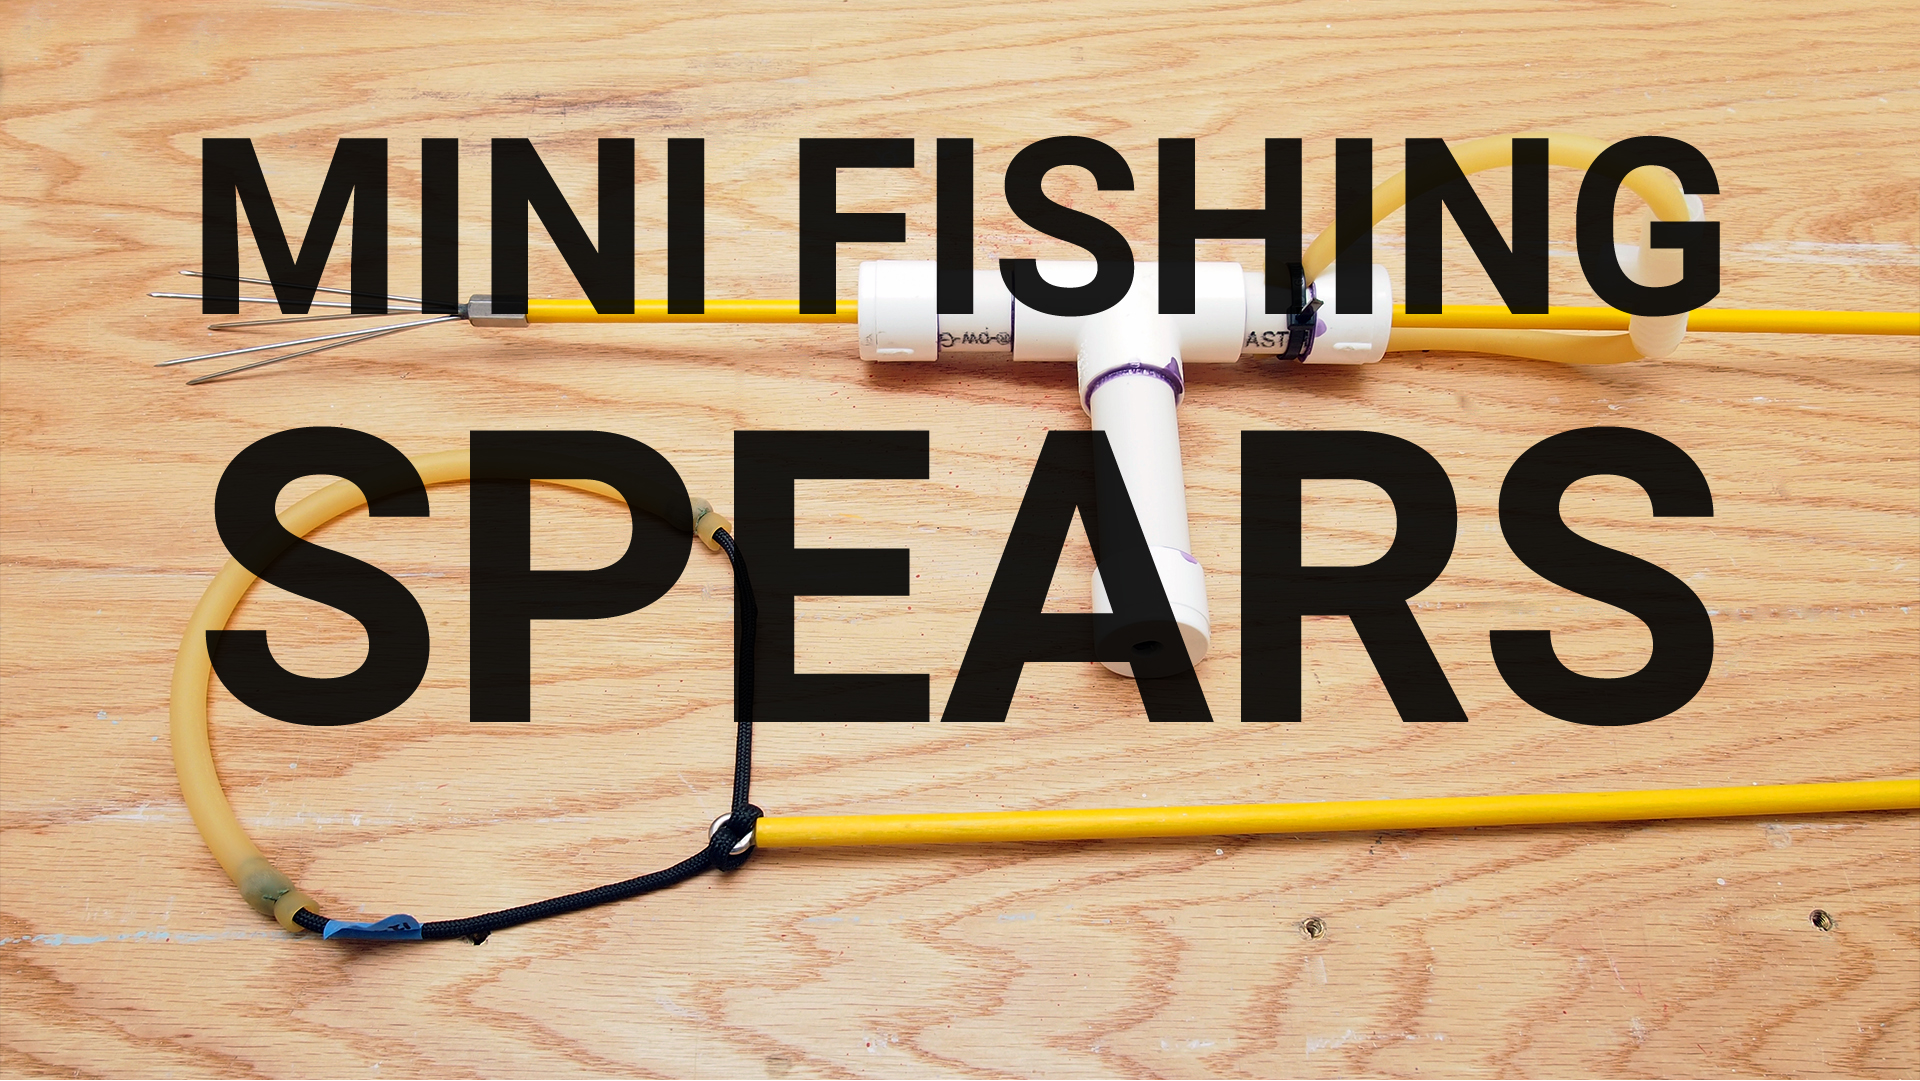 Mini Fishing Spears